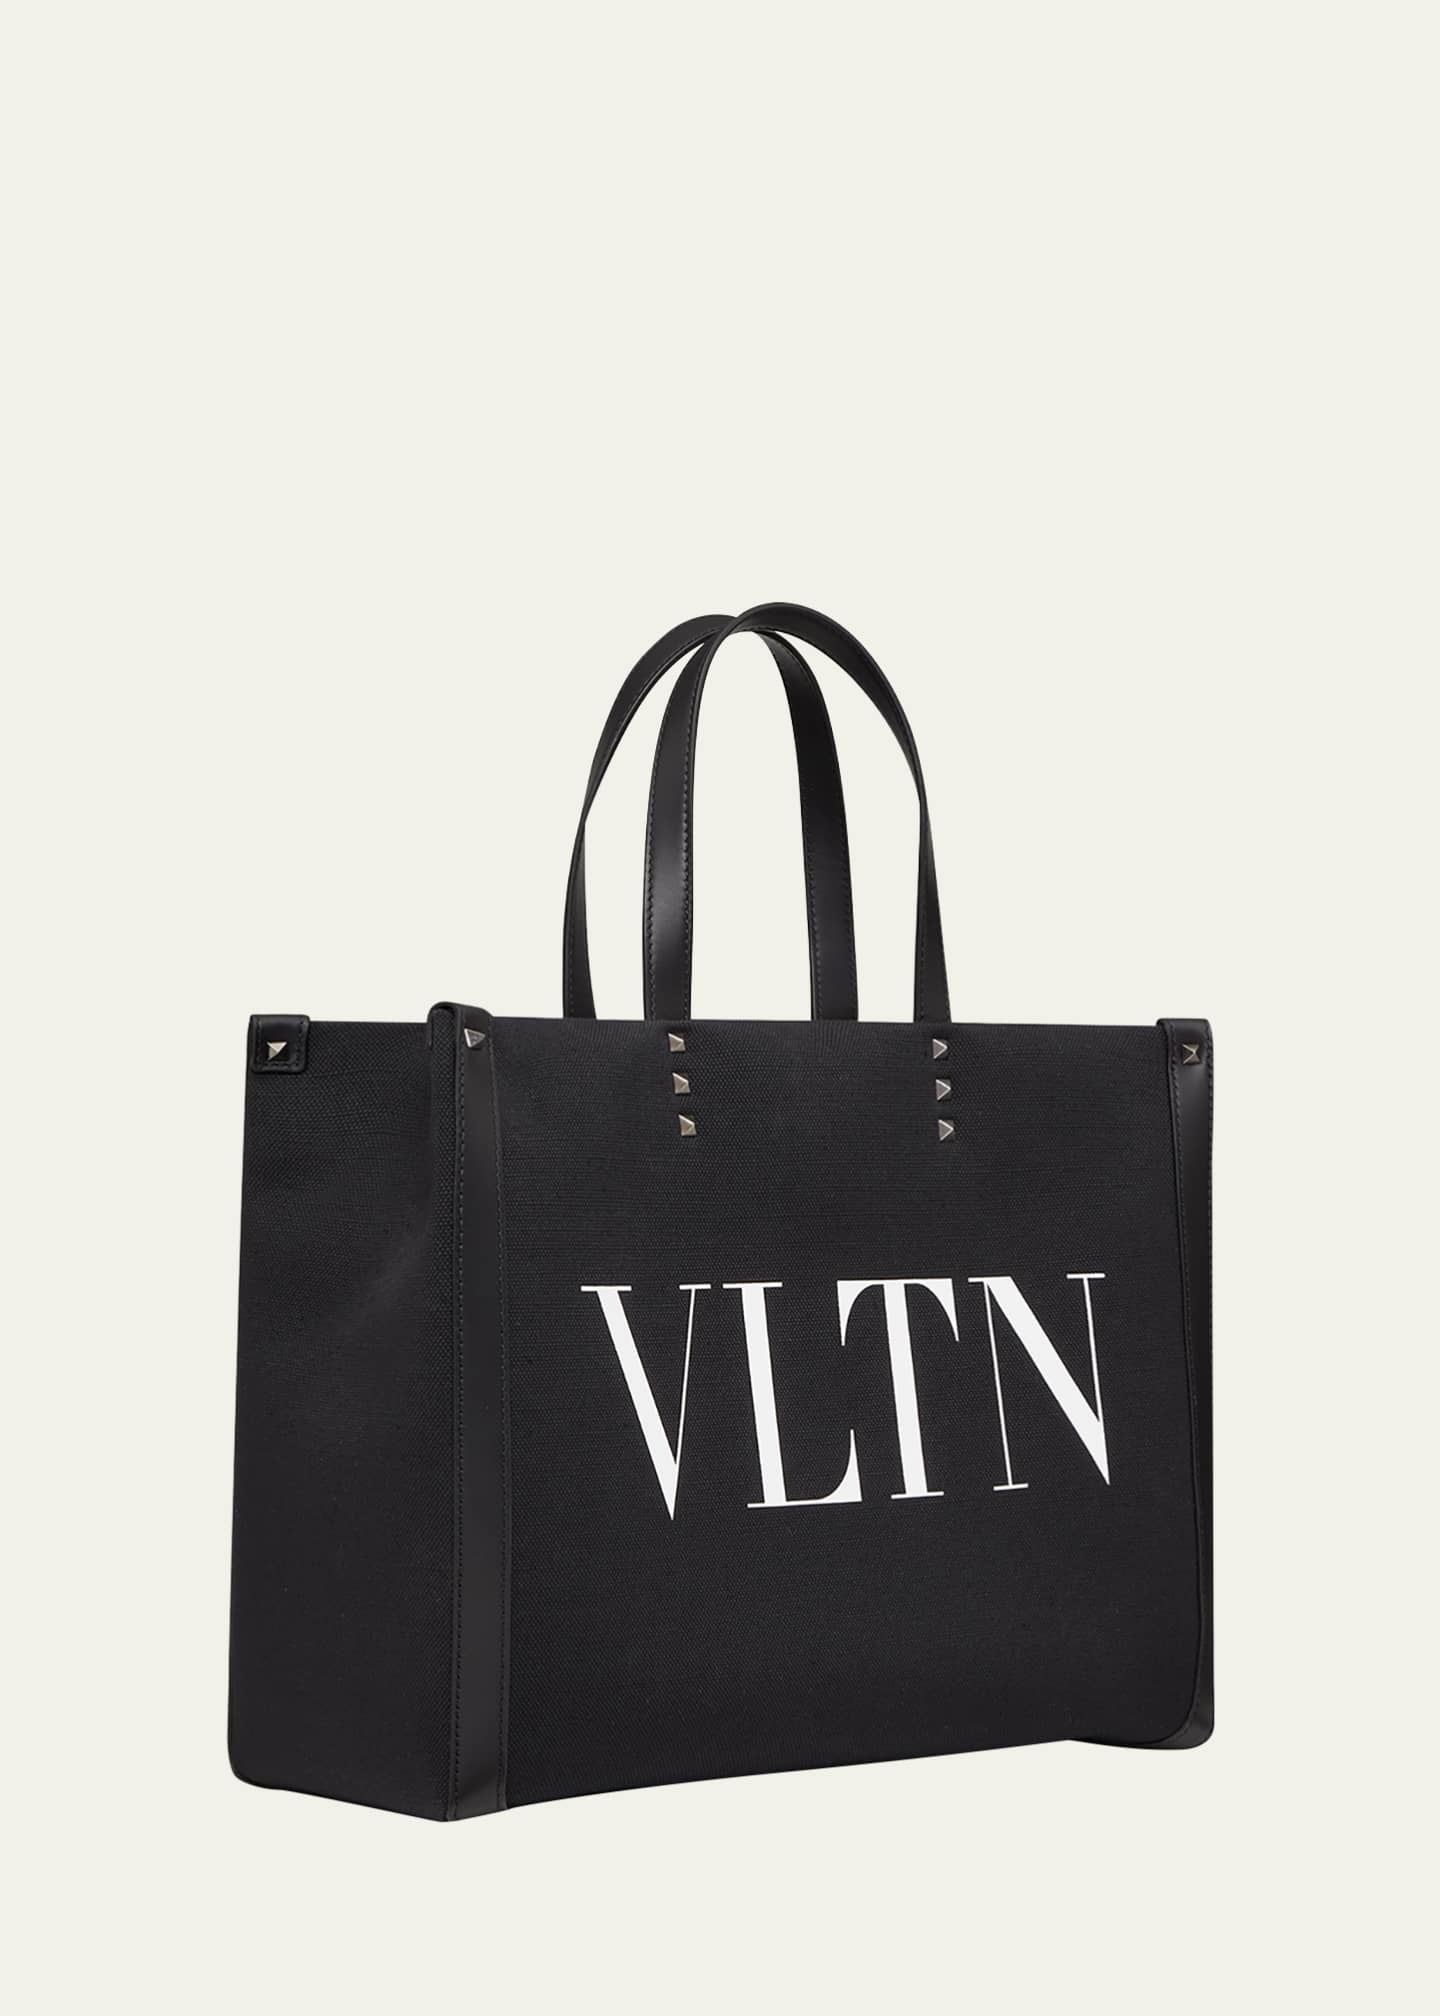 Valentino Garavani Men's VLTN Medium Canvas Tote Bag - Bergdorf Goodman